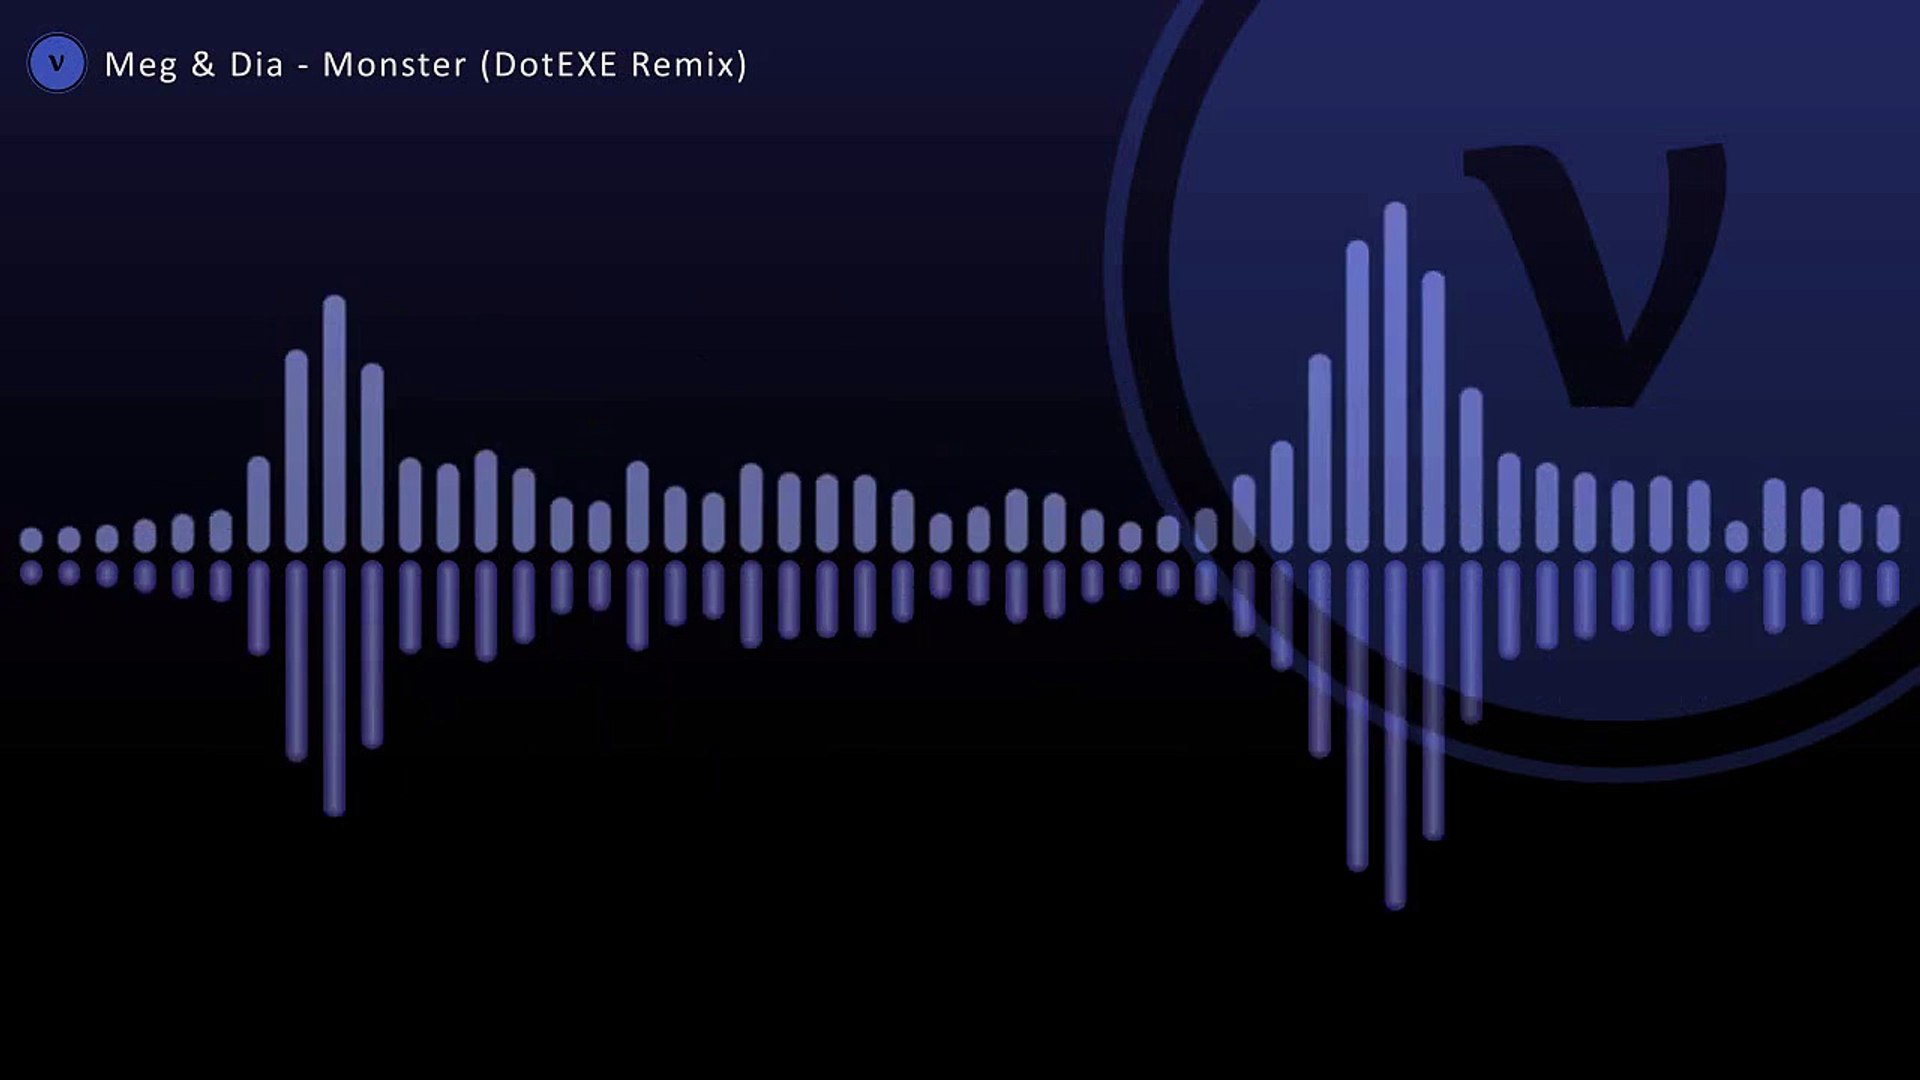 Meg & Dia - Monster (DotEXE Dubstep Remix) - Dailymotion Video